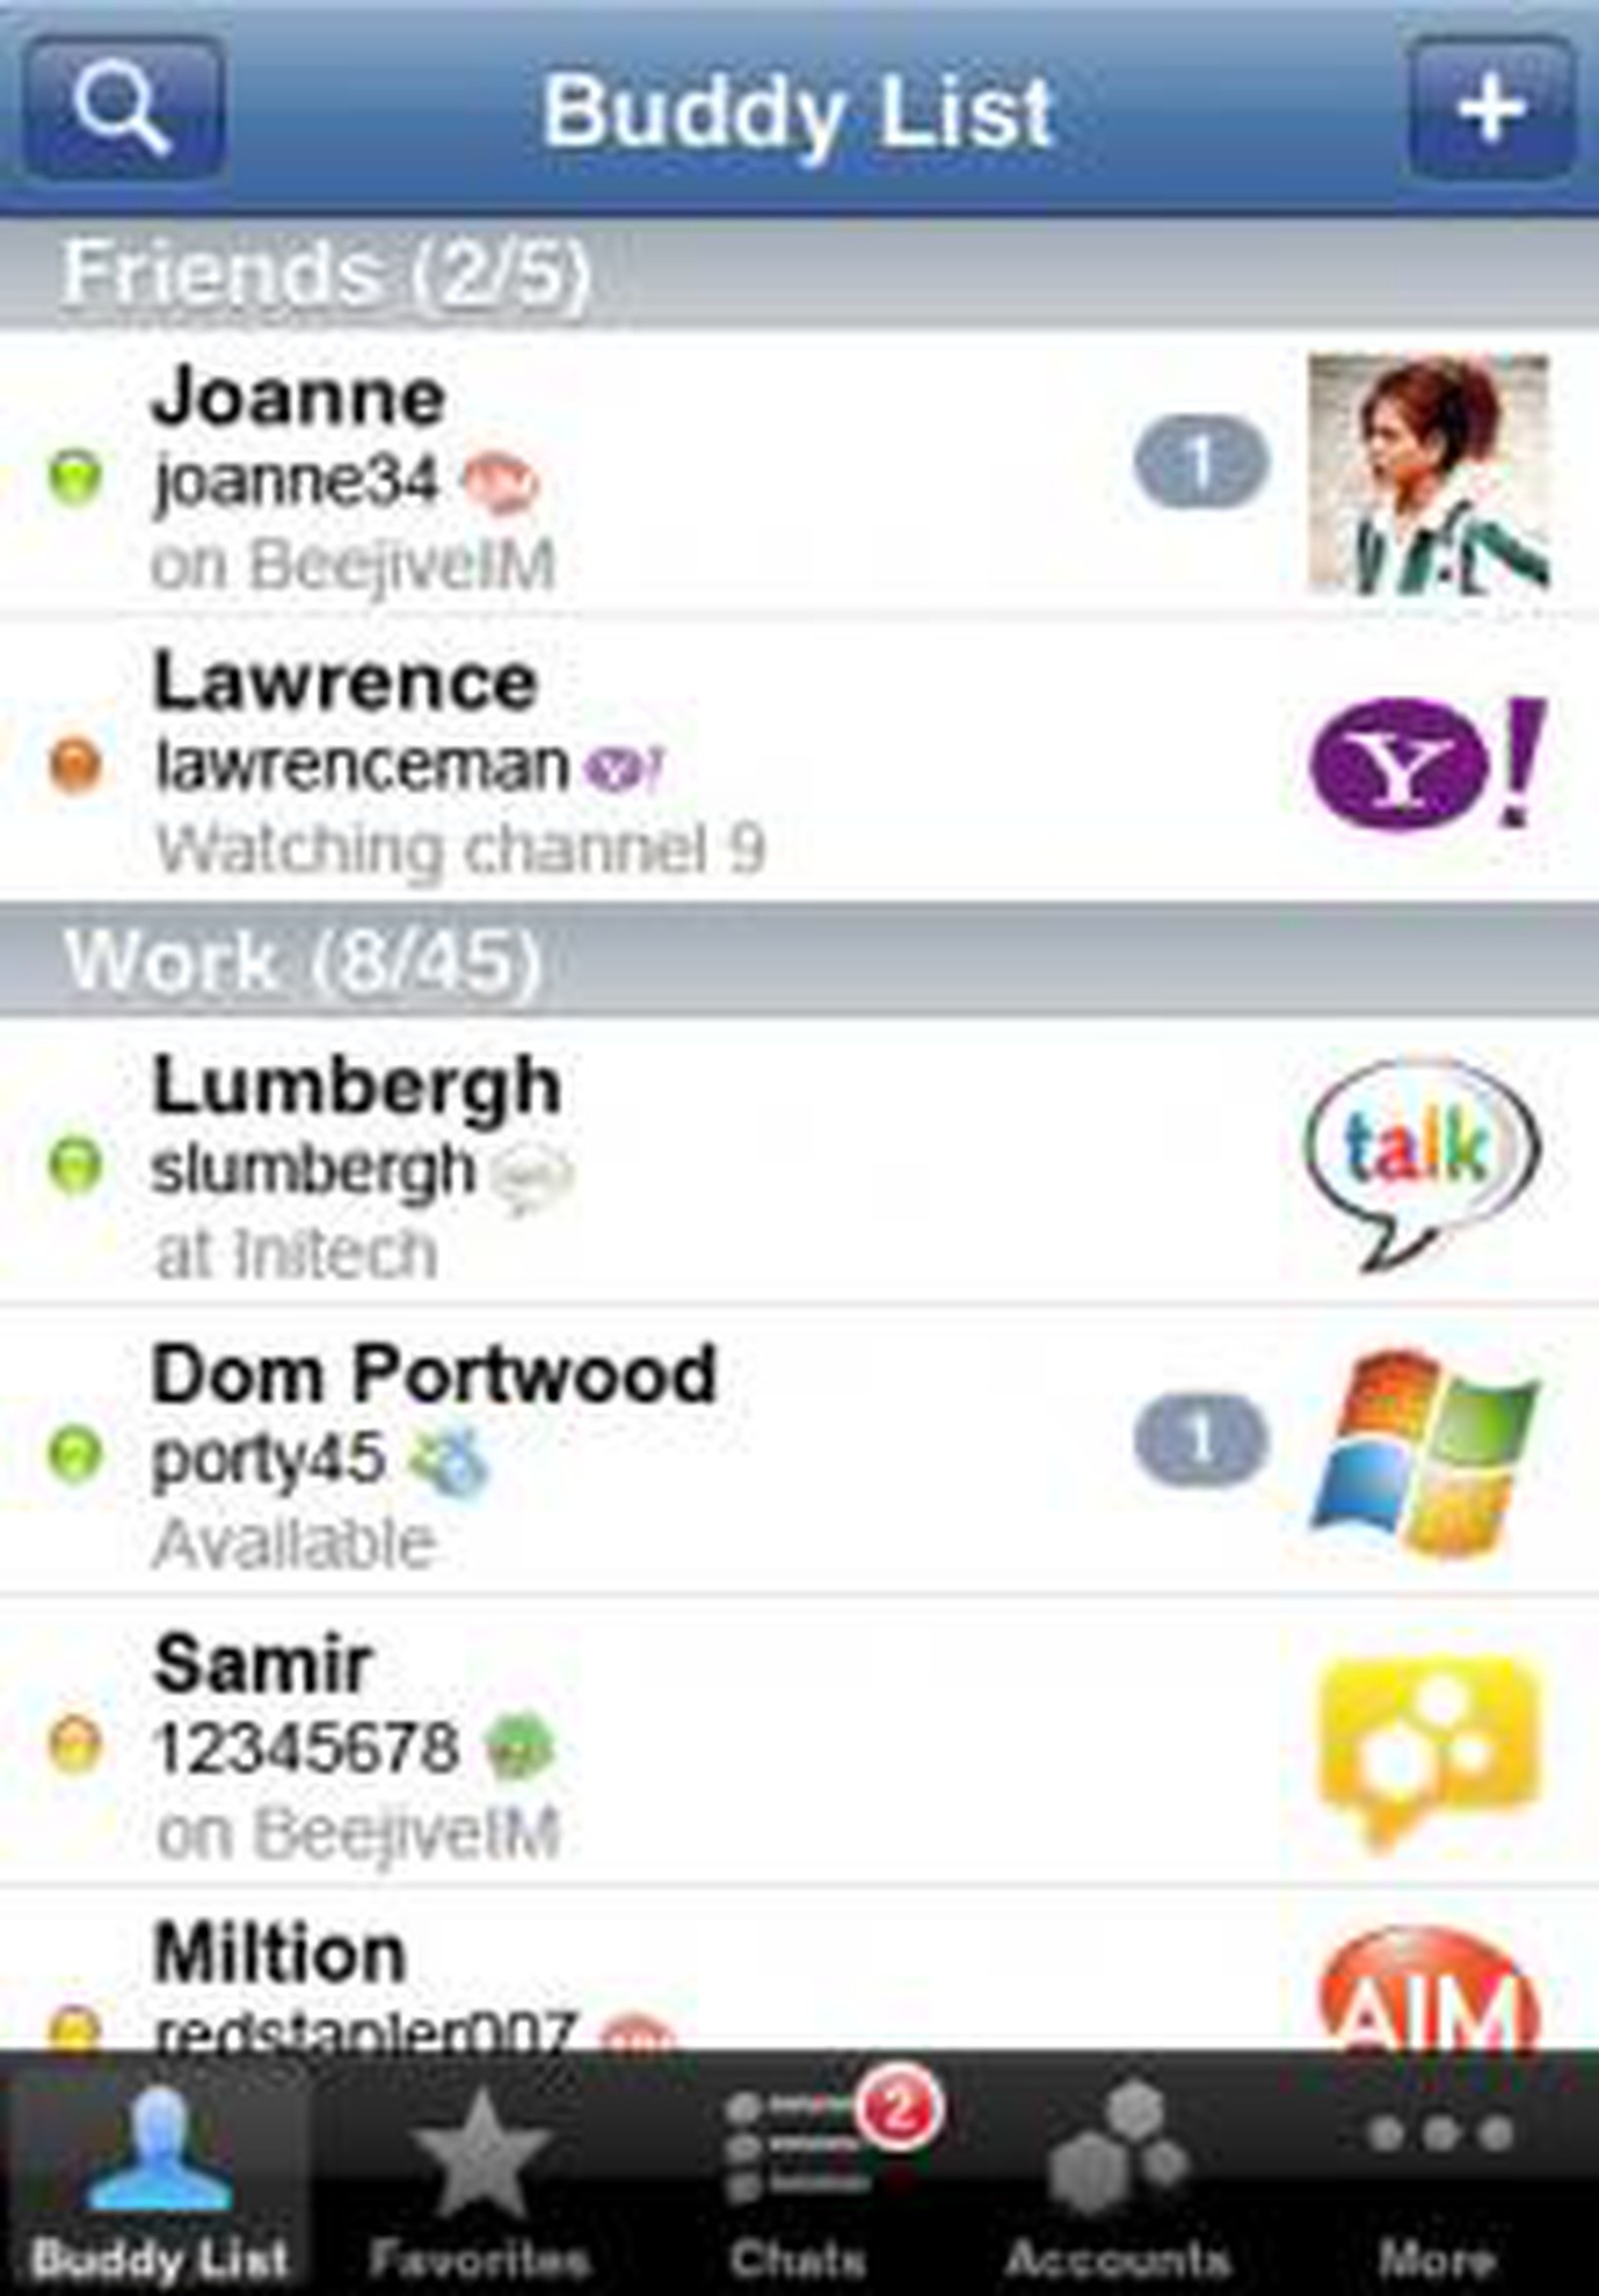 yahoo messenger iphone apps